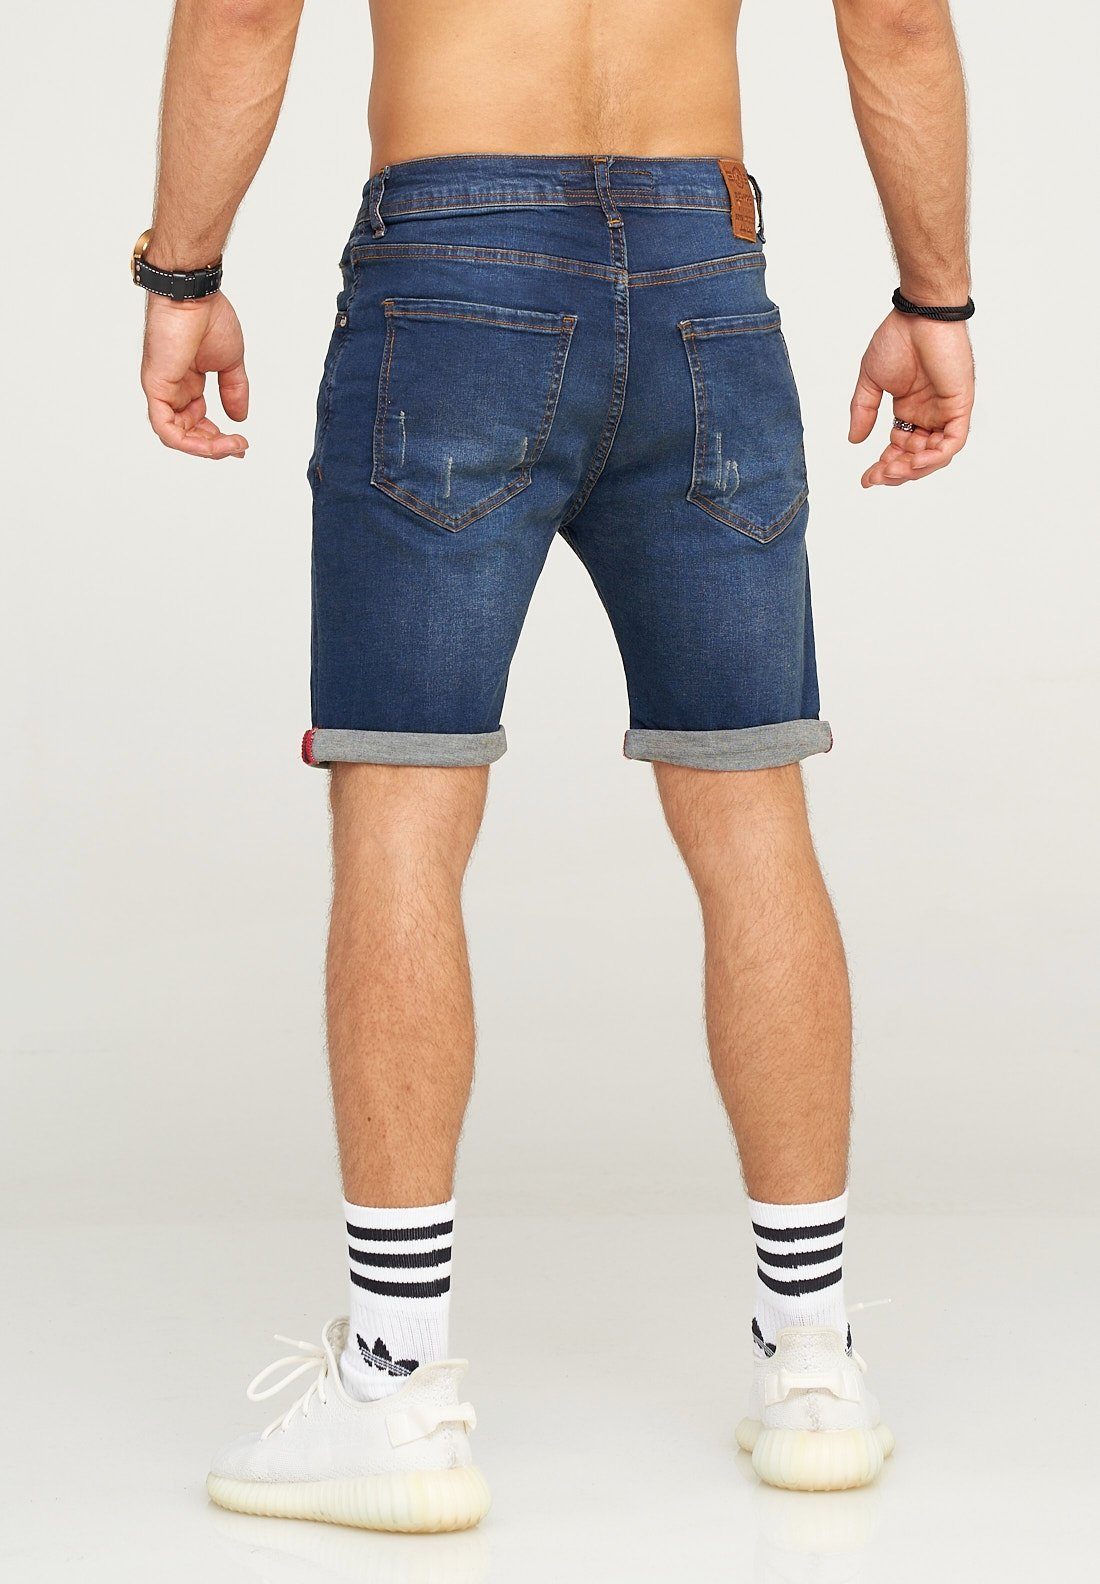 behype Shorts MALAY im klassischen dunkelblau 5-Pocket-Stil